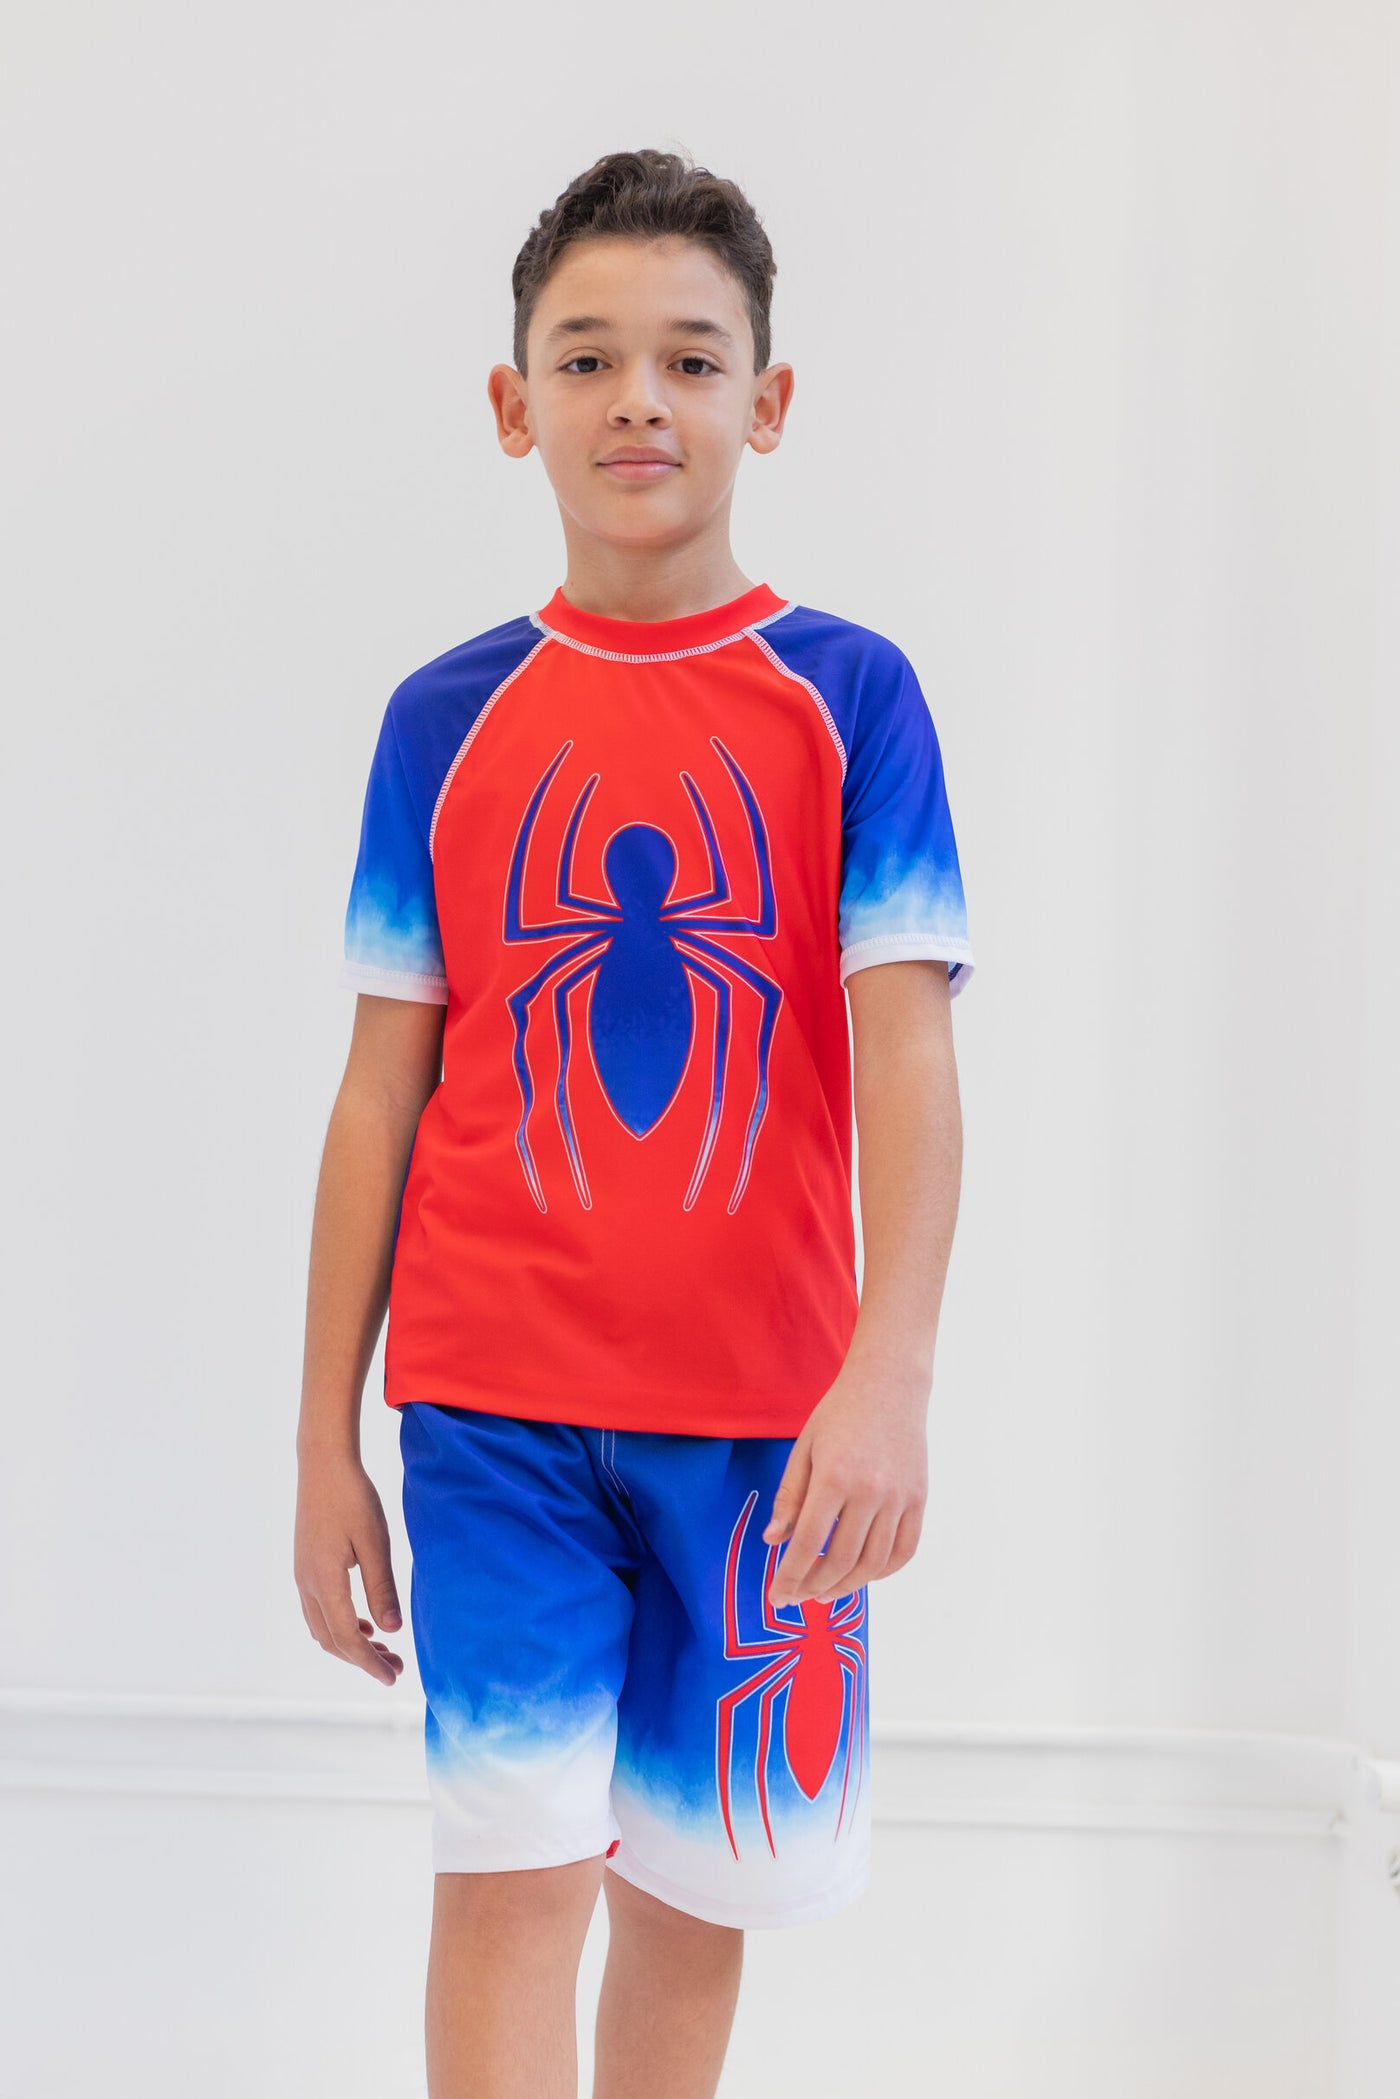 Marvel Spider-Man UPF 50+ Rash Guard Swim Trunks Outfit Set